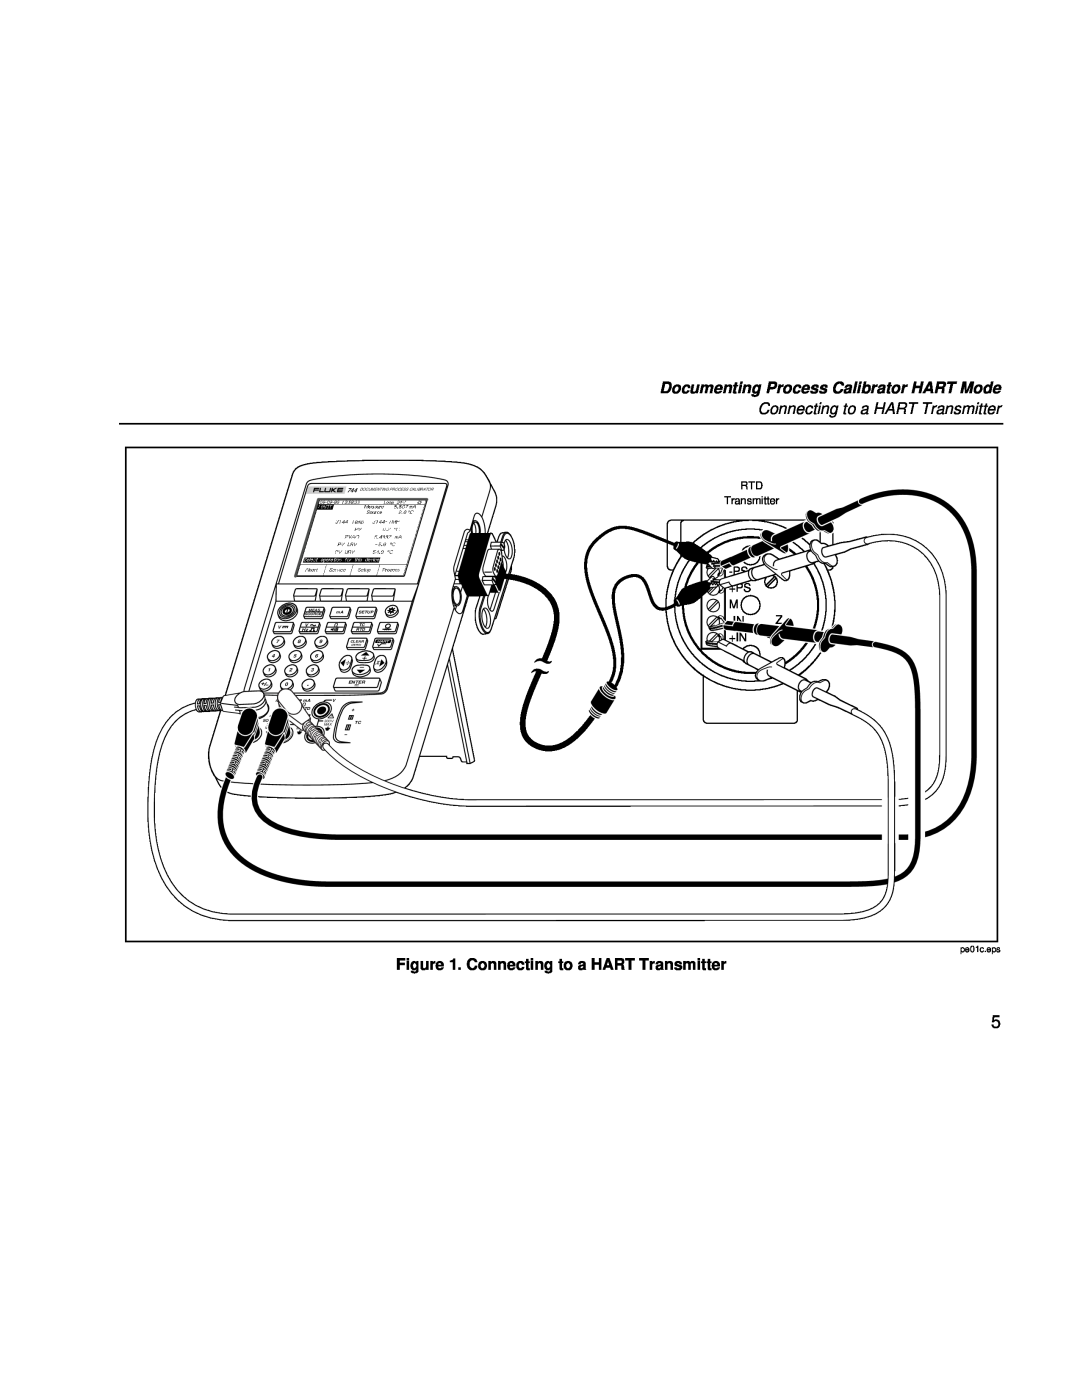 Fluke 744 manual Documenting Process Calibrator HART Mode, Connecting to a HART Transmitter, pe01c.eps 